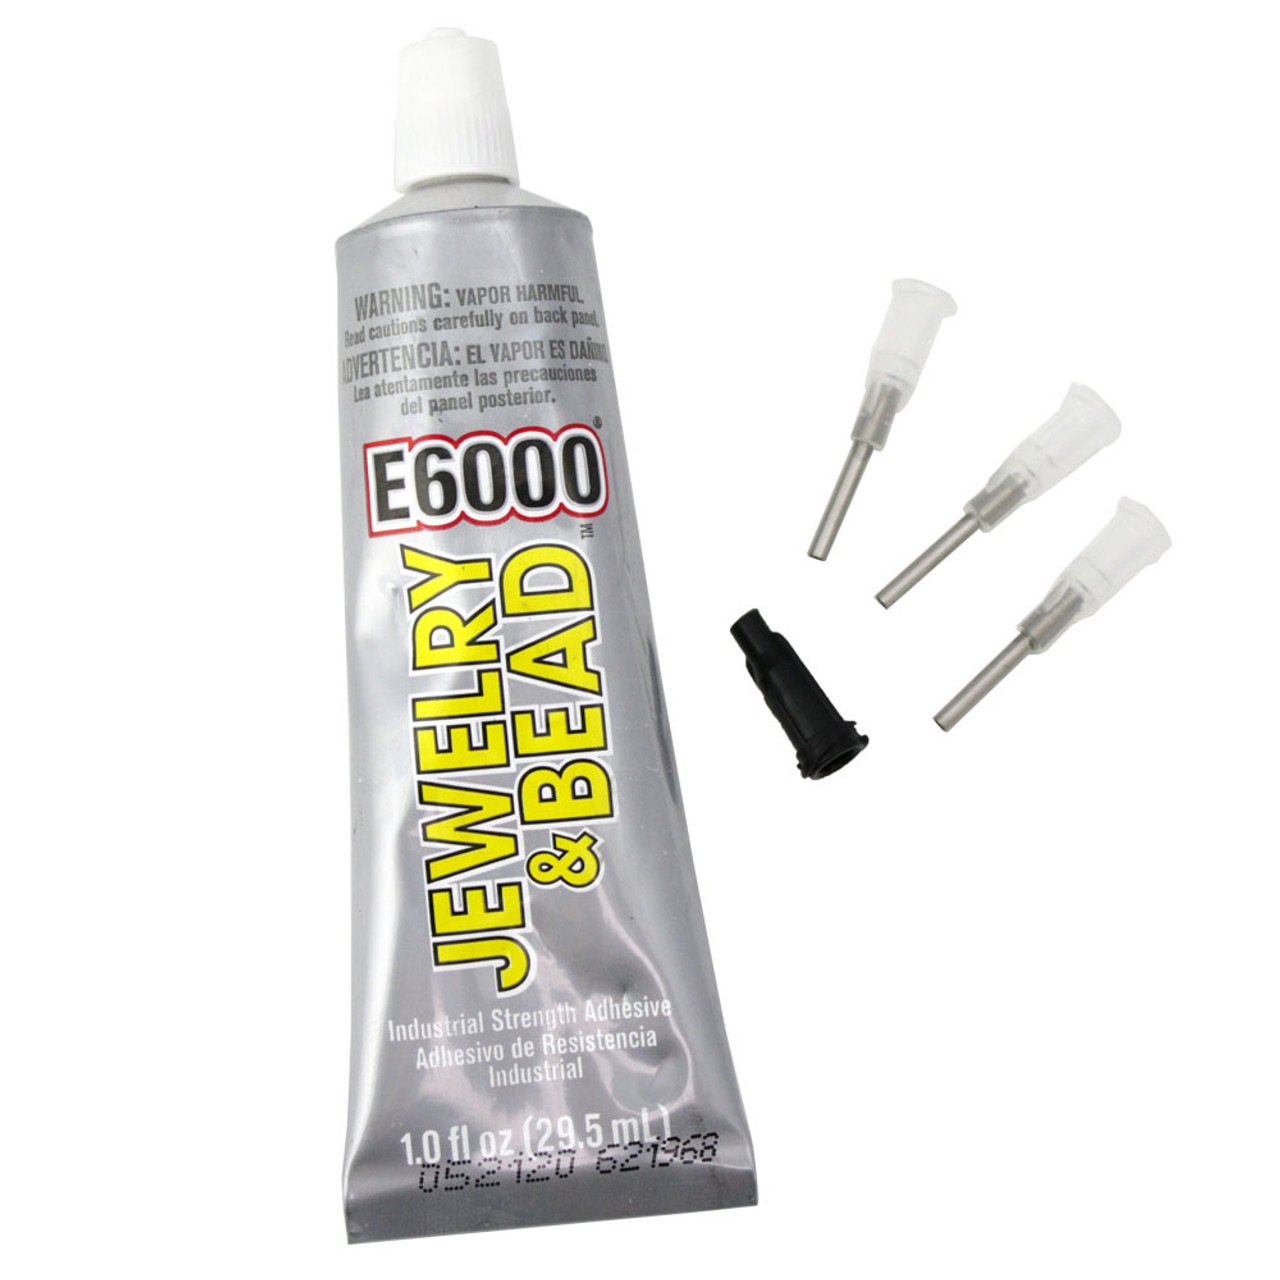 E-6000 Jewelry & Bead Permanent Glue - Glue - Adhesives - Notions